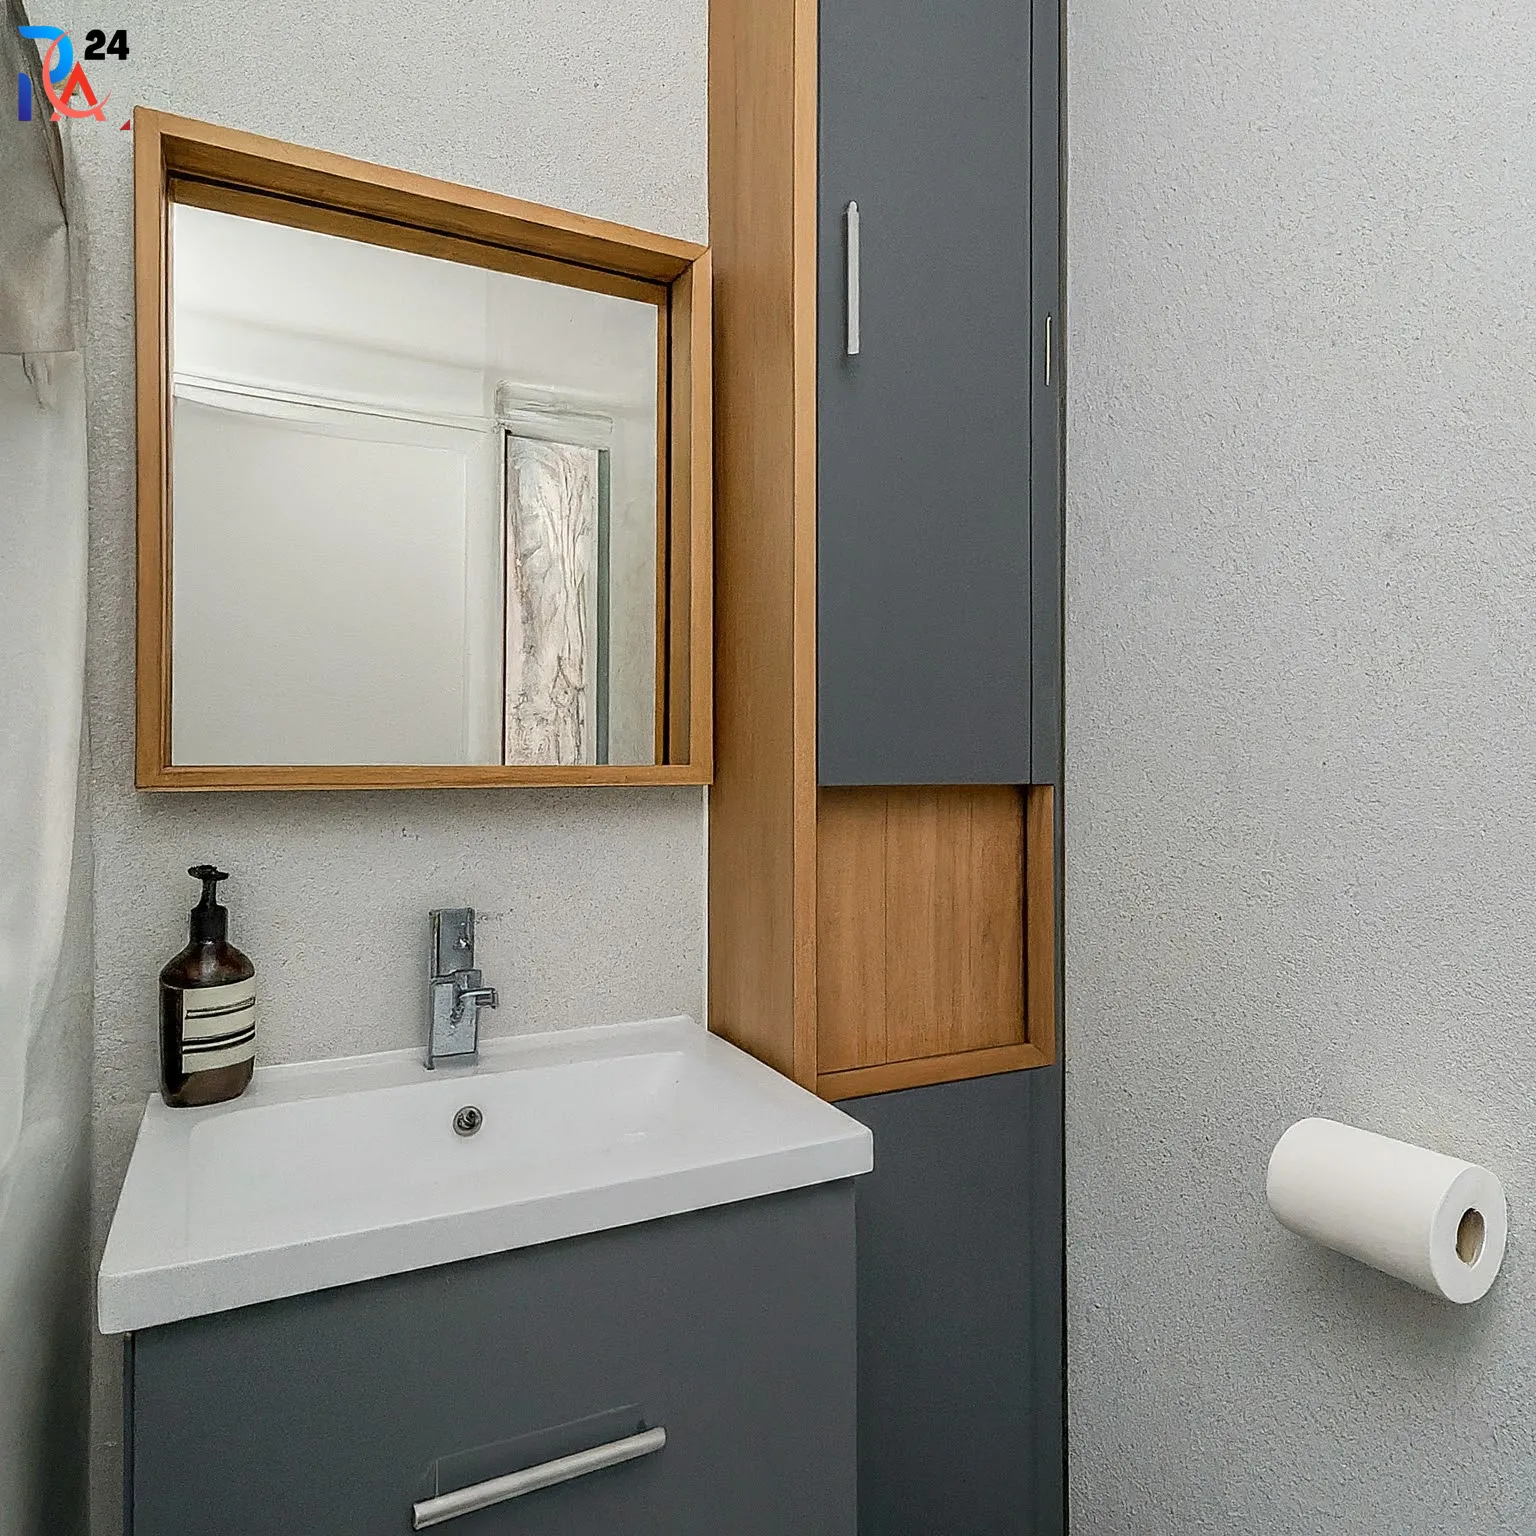 tiny bathroom storage ideas121